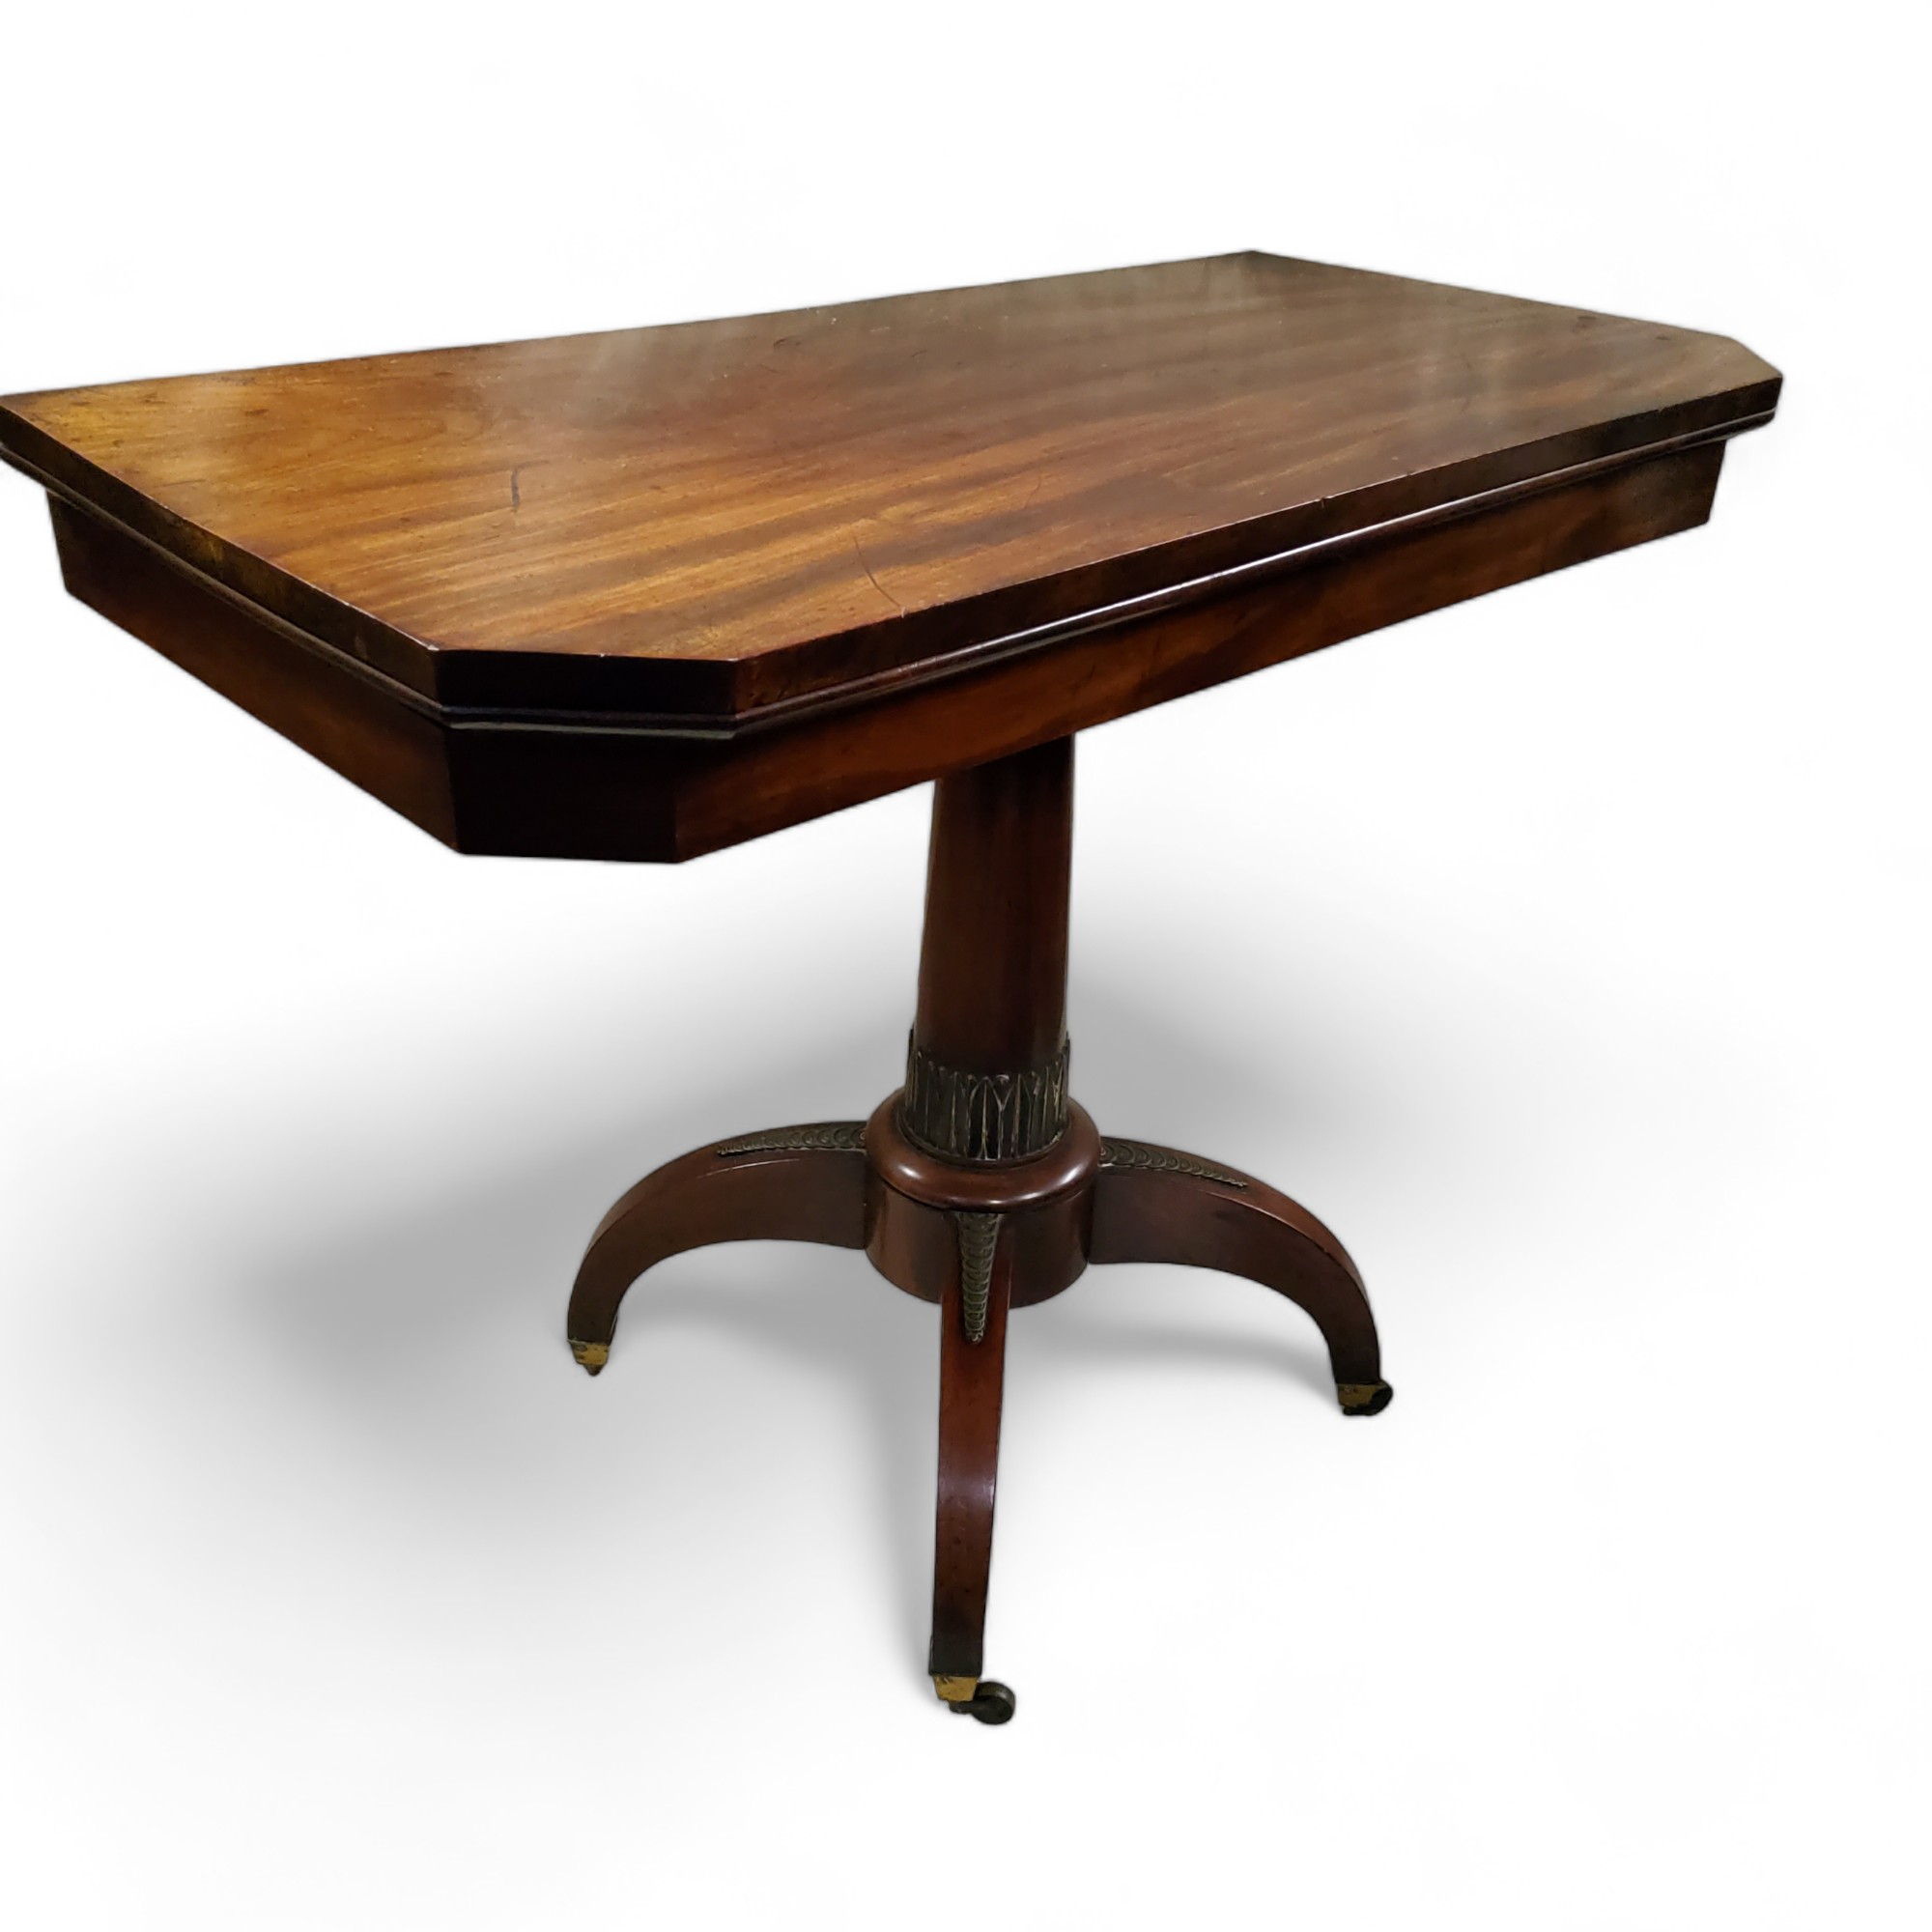 A George IV mahogany tea table, canted rectangular top, spreading cylindrical column, four scroll